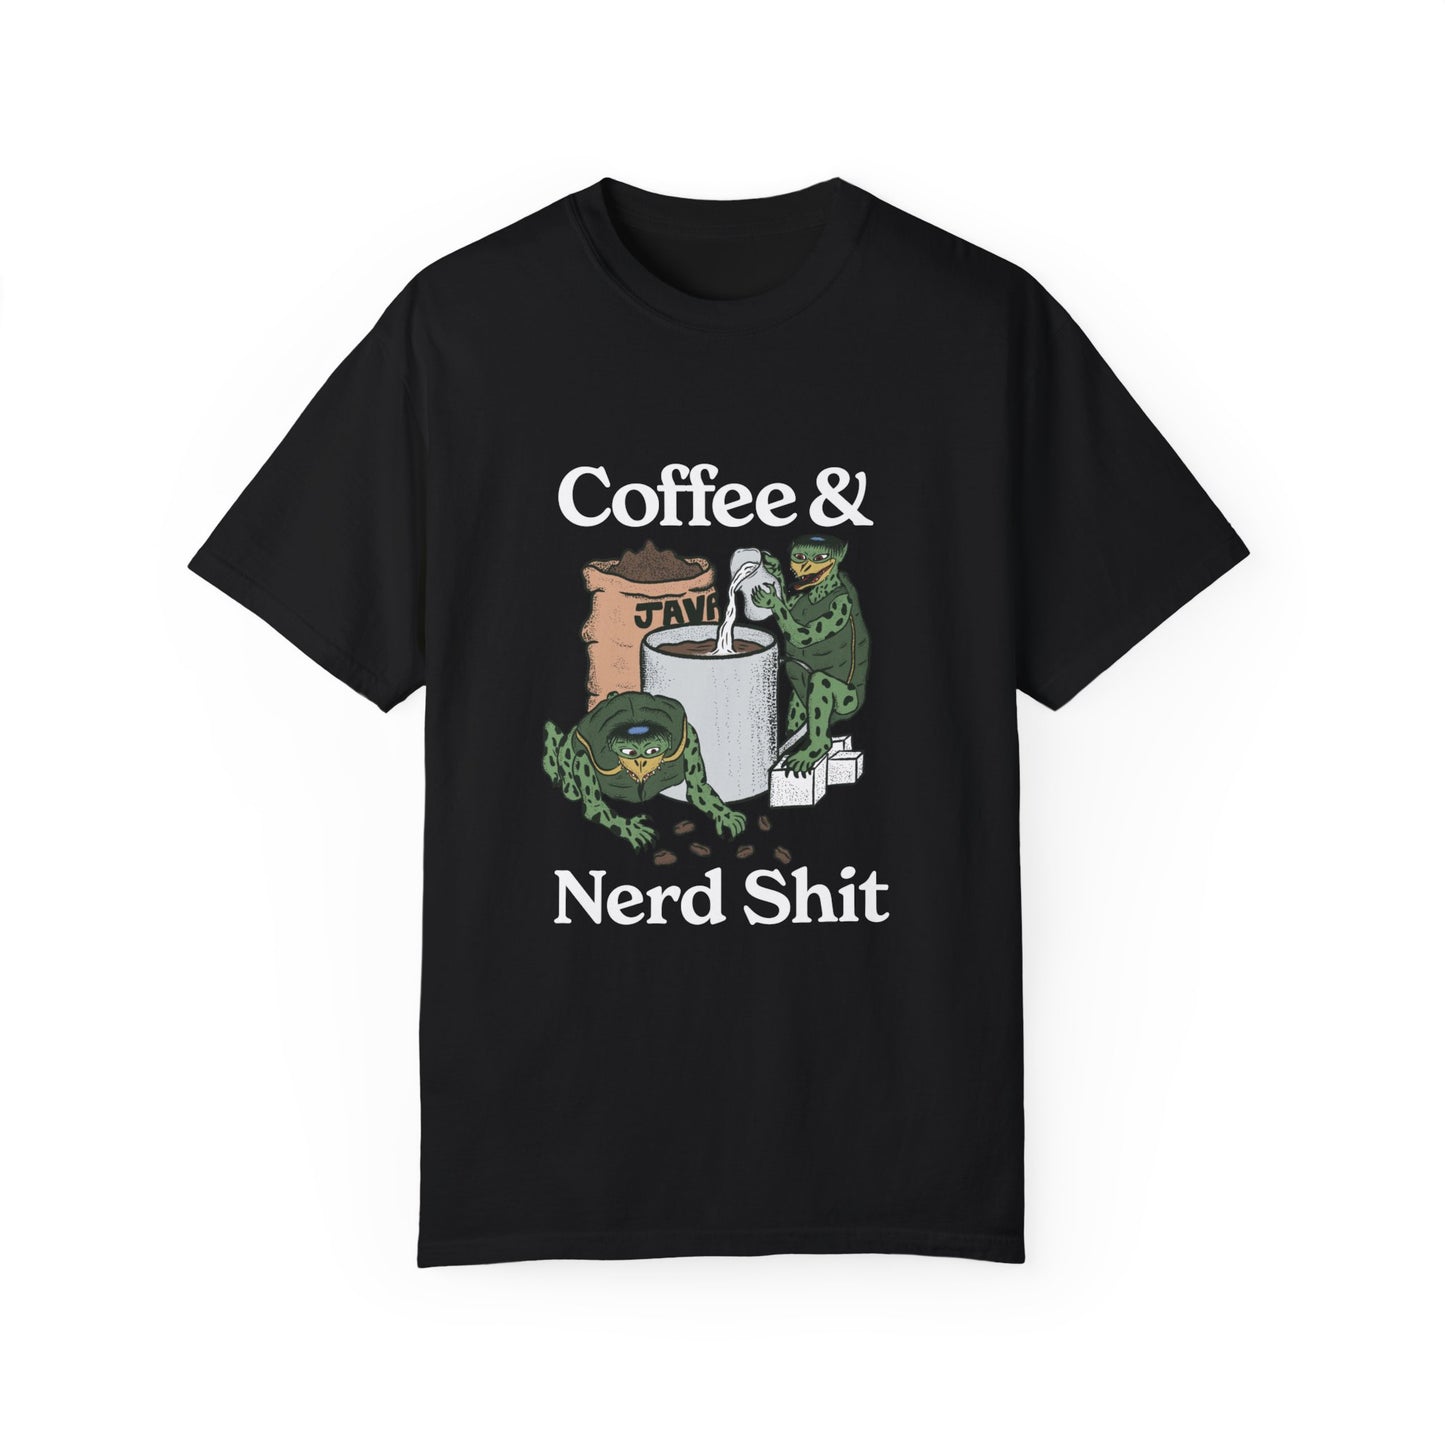 Coffee & Nerd Shit Tee